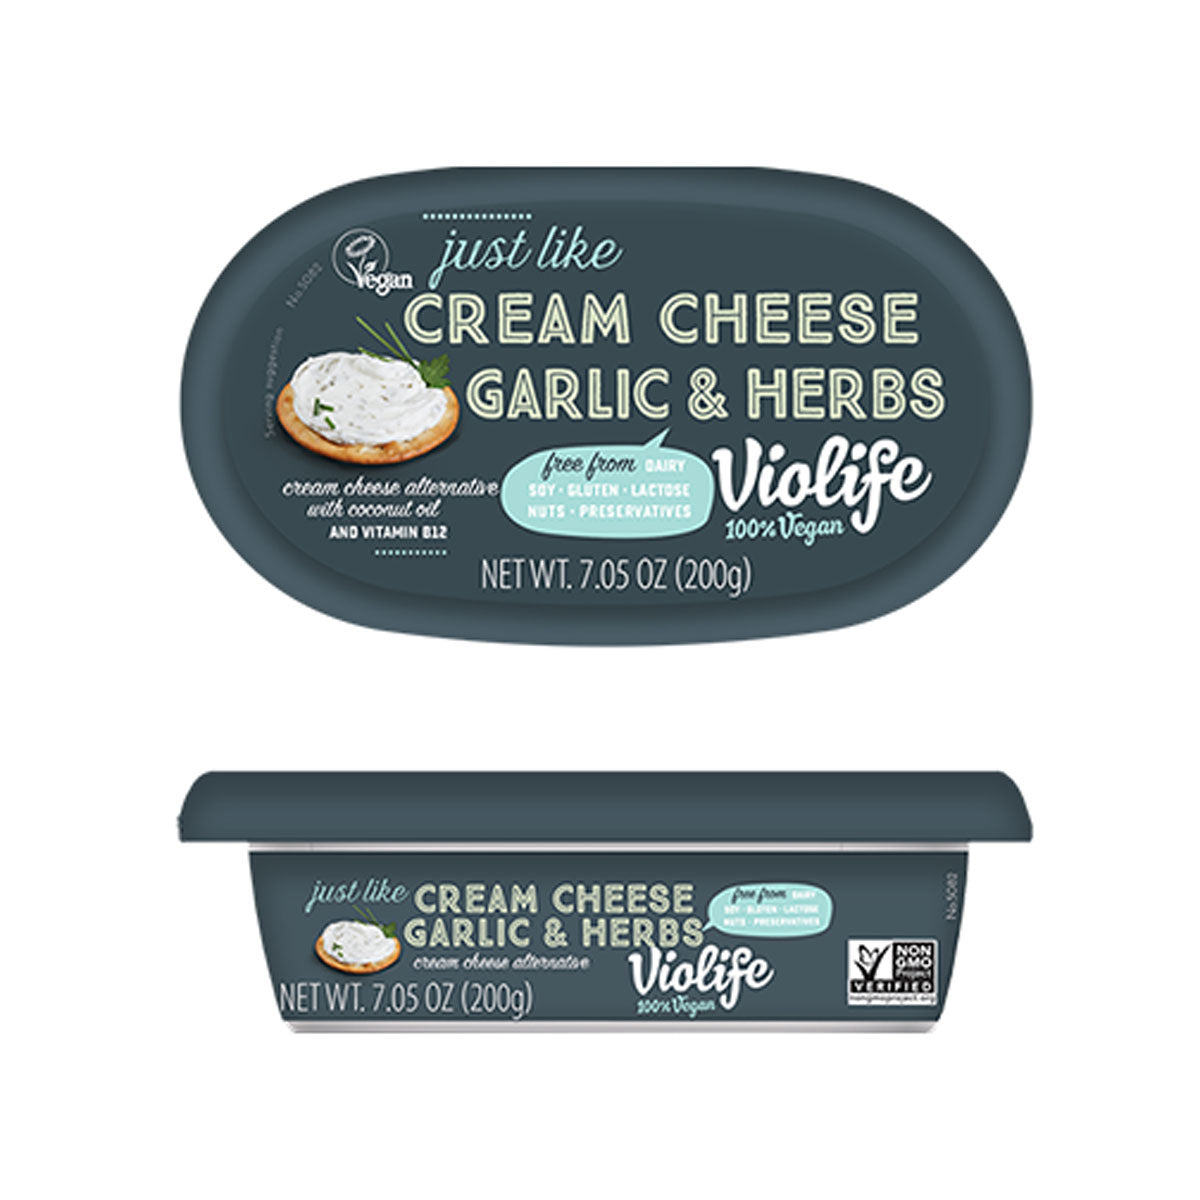 Violife Vegan Cream Cheese Garlic & Herbs Retail 7.05 Oz Box